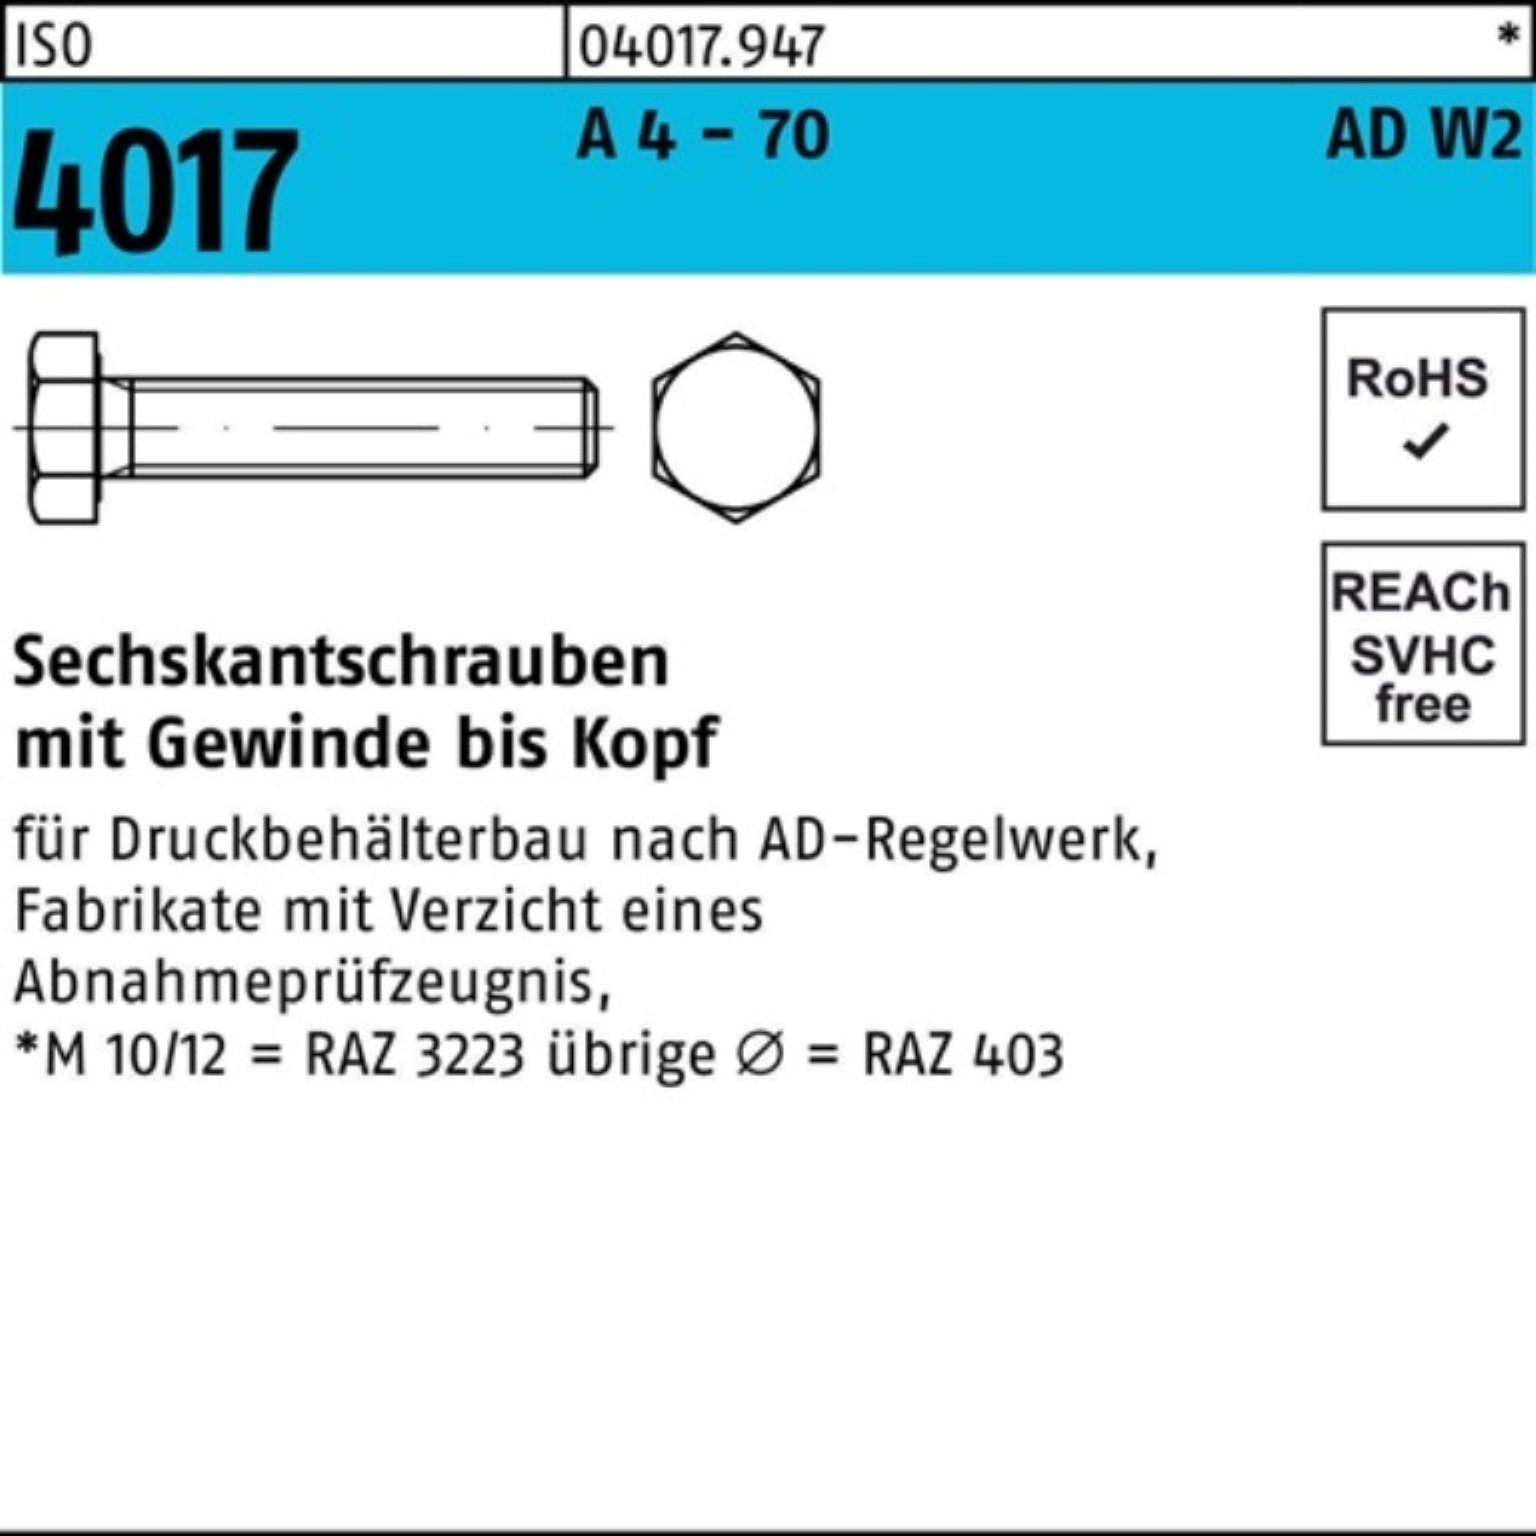 M10x Pack Sechskantschraube Sechskantschraube 100er VG 4017 A 50 Bufab St - AD-W2 ISO 55 70 4